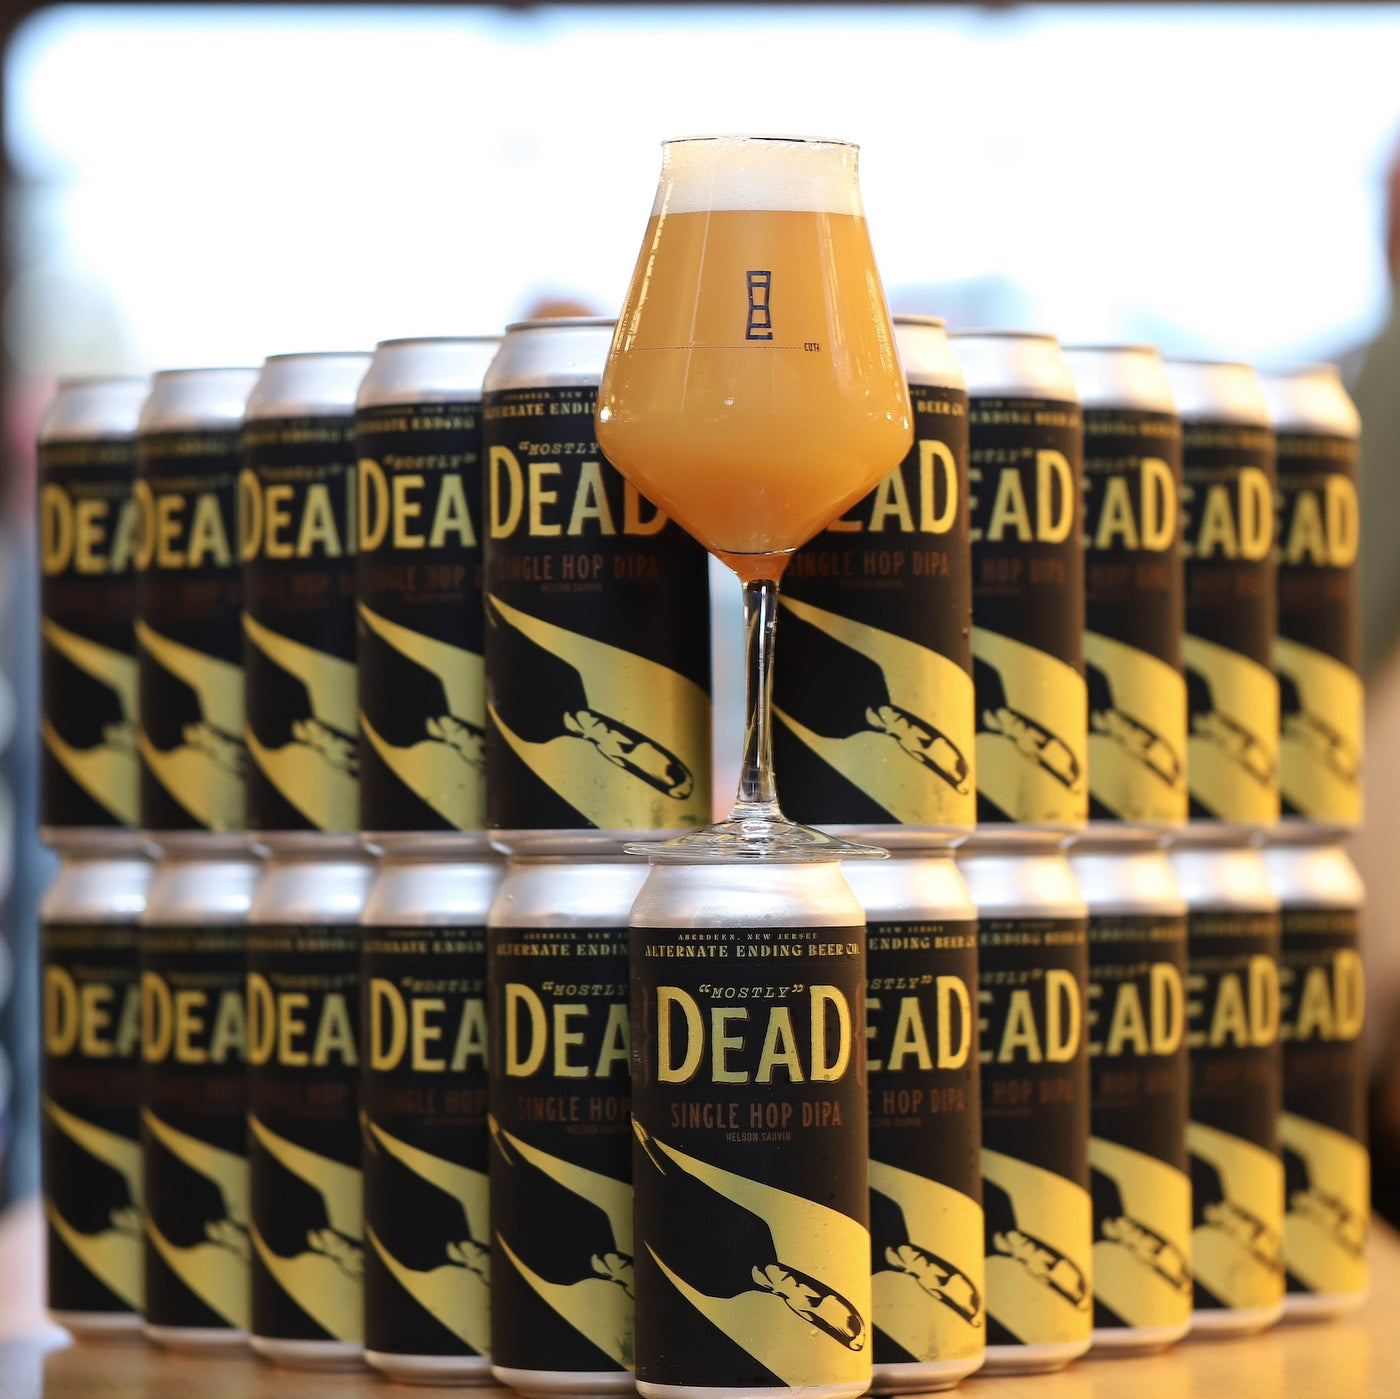 Alternate Ending Beer Co. Mostly Dead Single Hop DIPA 8%